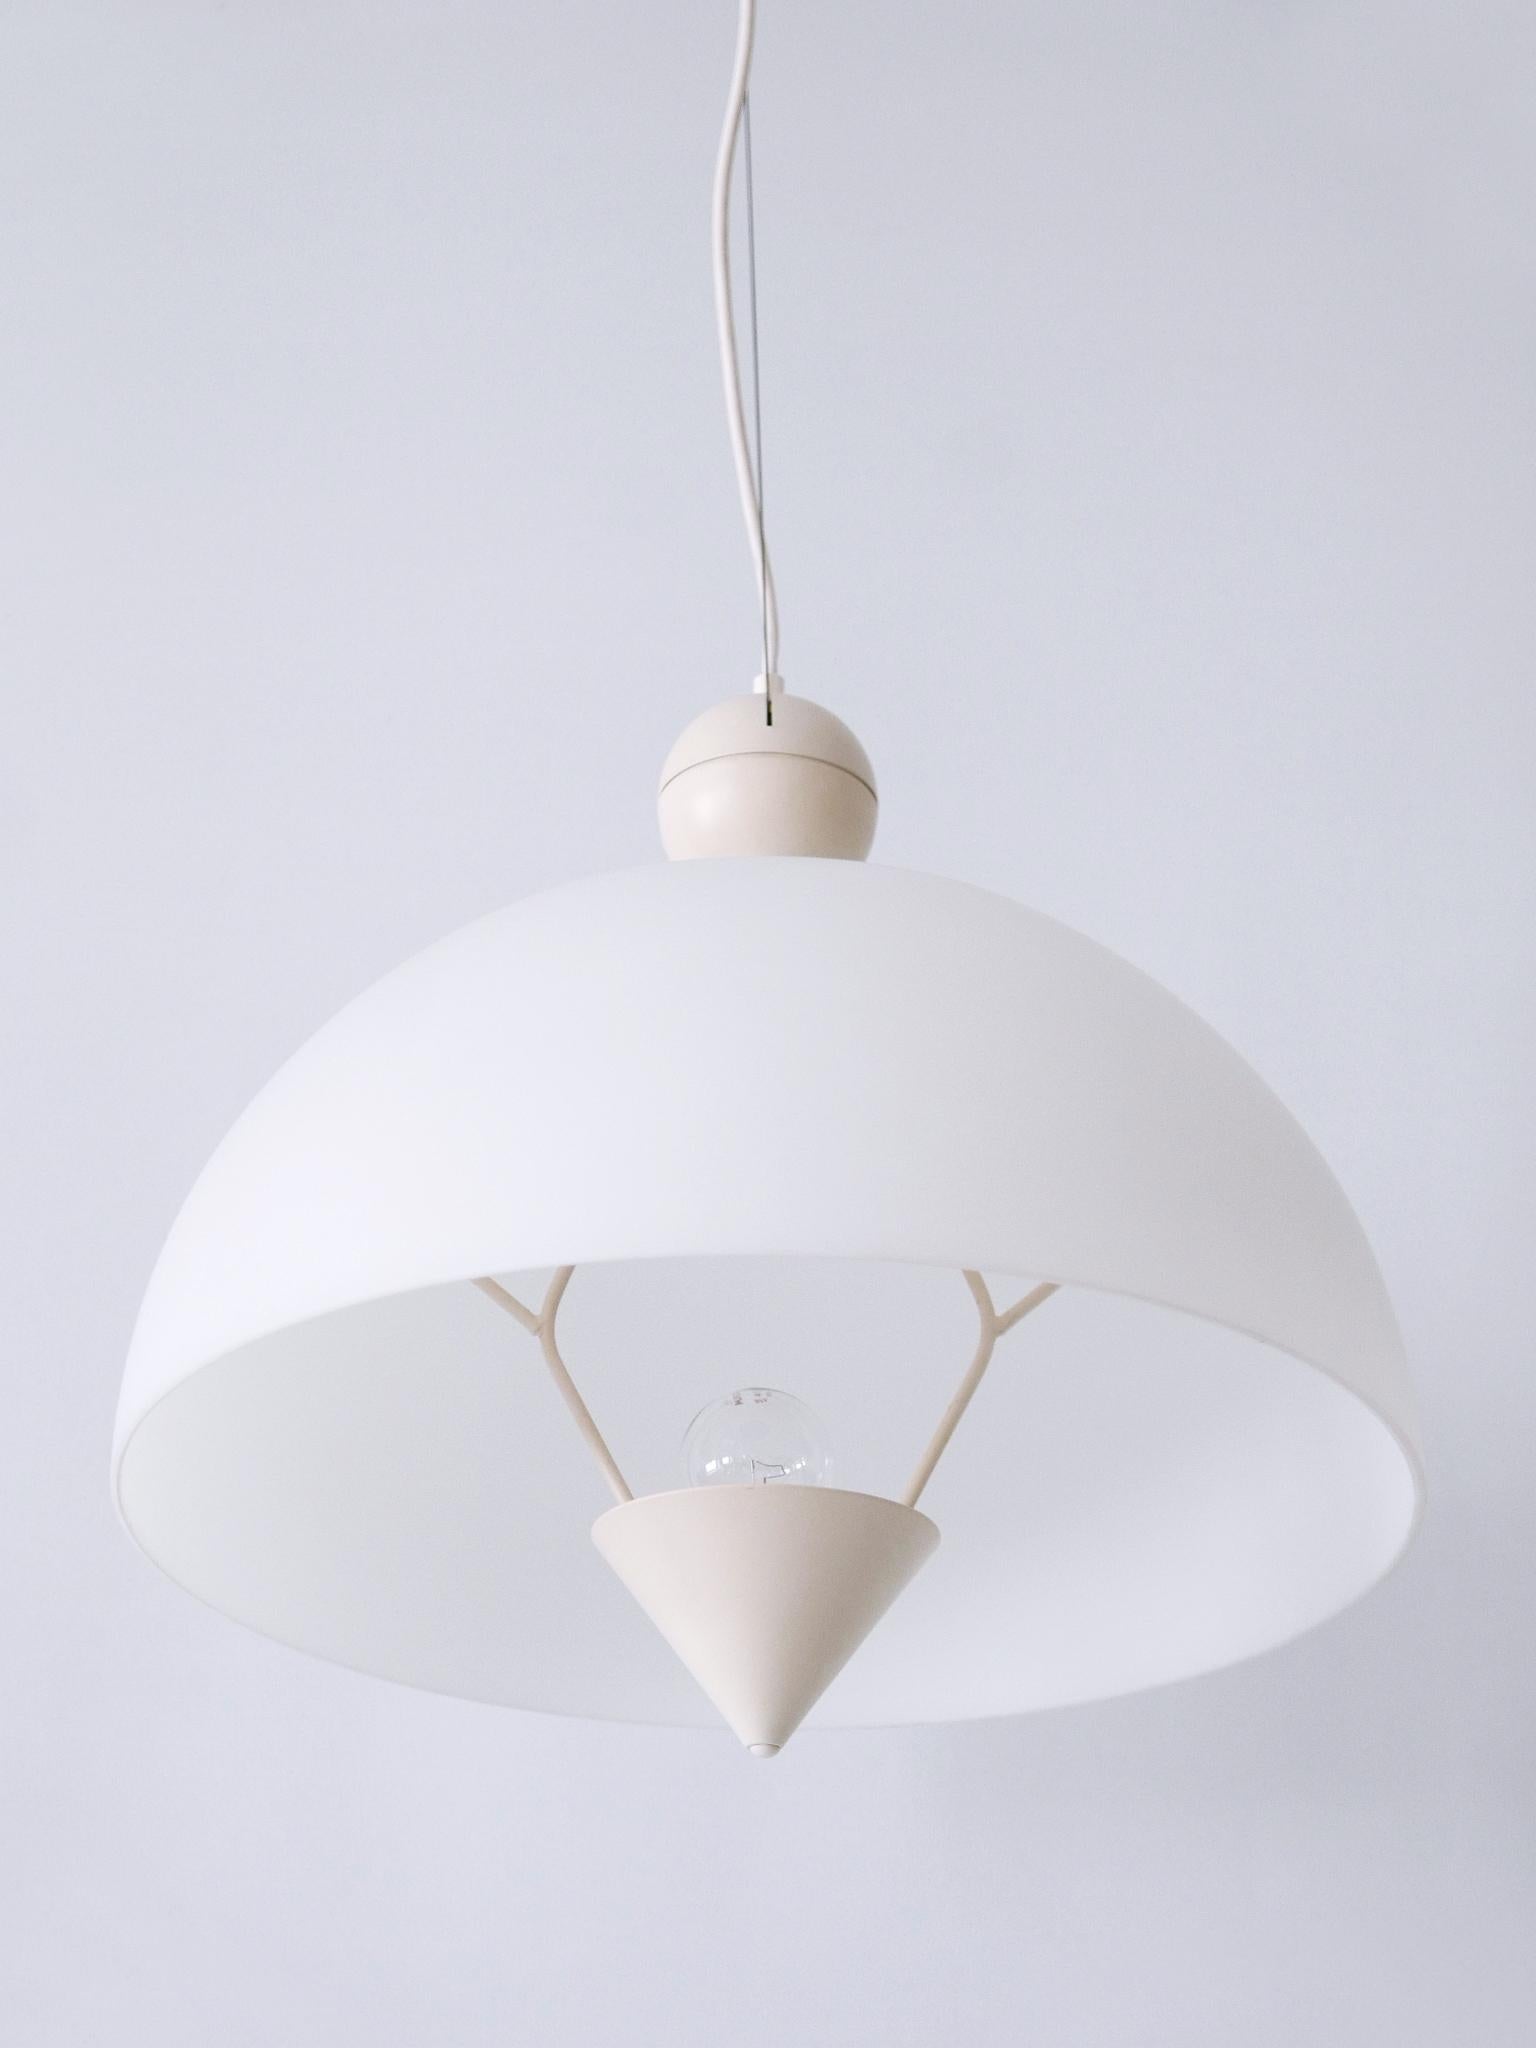 Rare & Elegant Mid-Century Modern Pendant Lamp or Hanging Light Italy 1970s For Sale 8